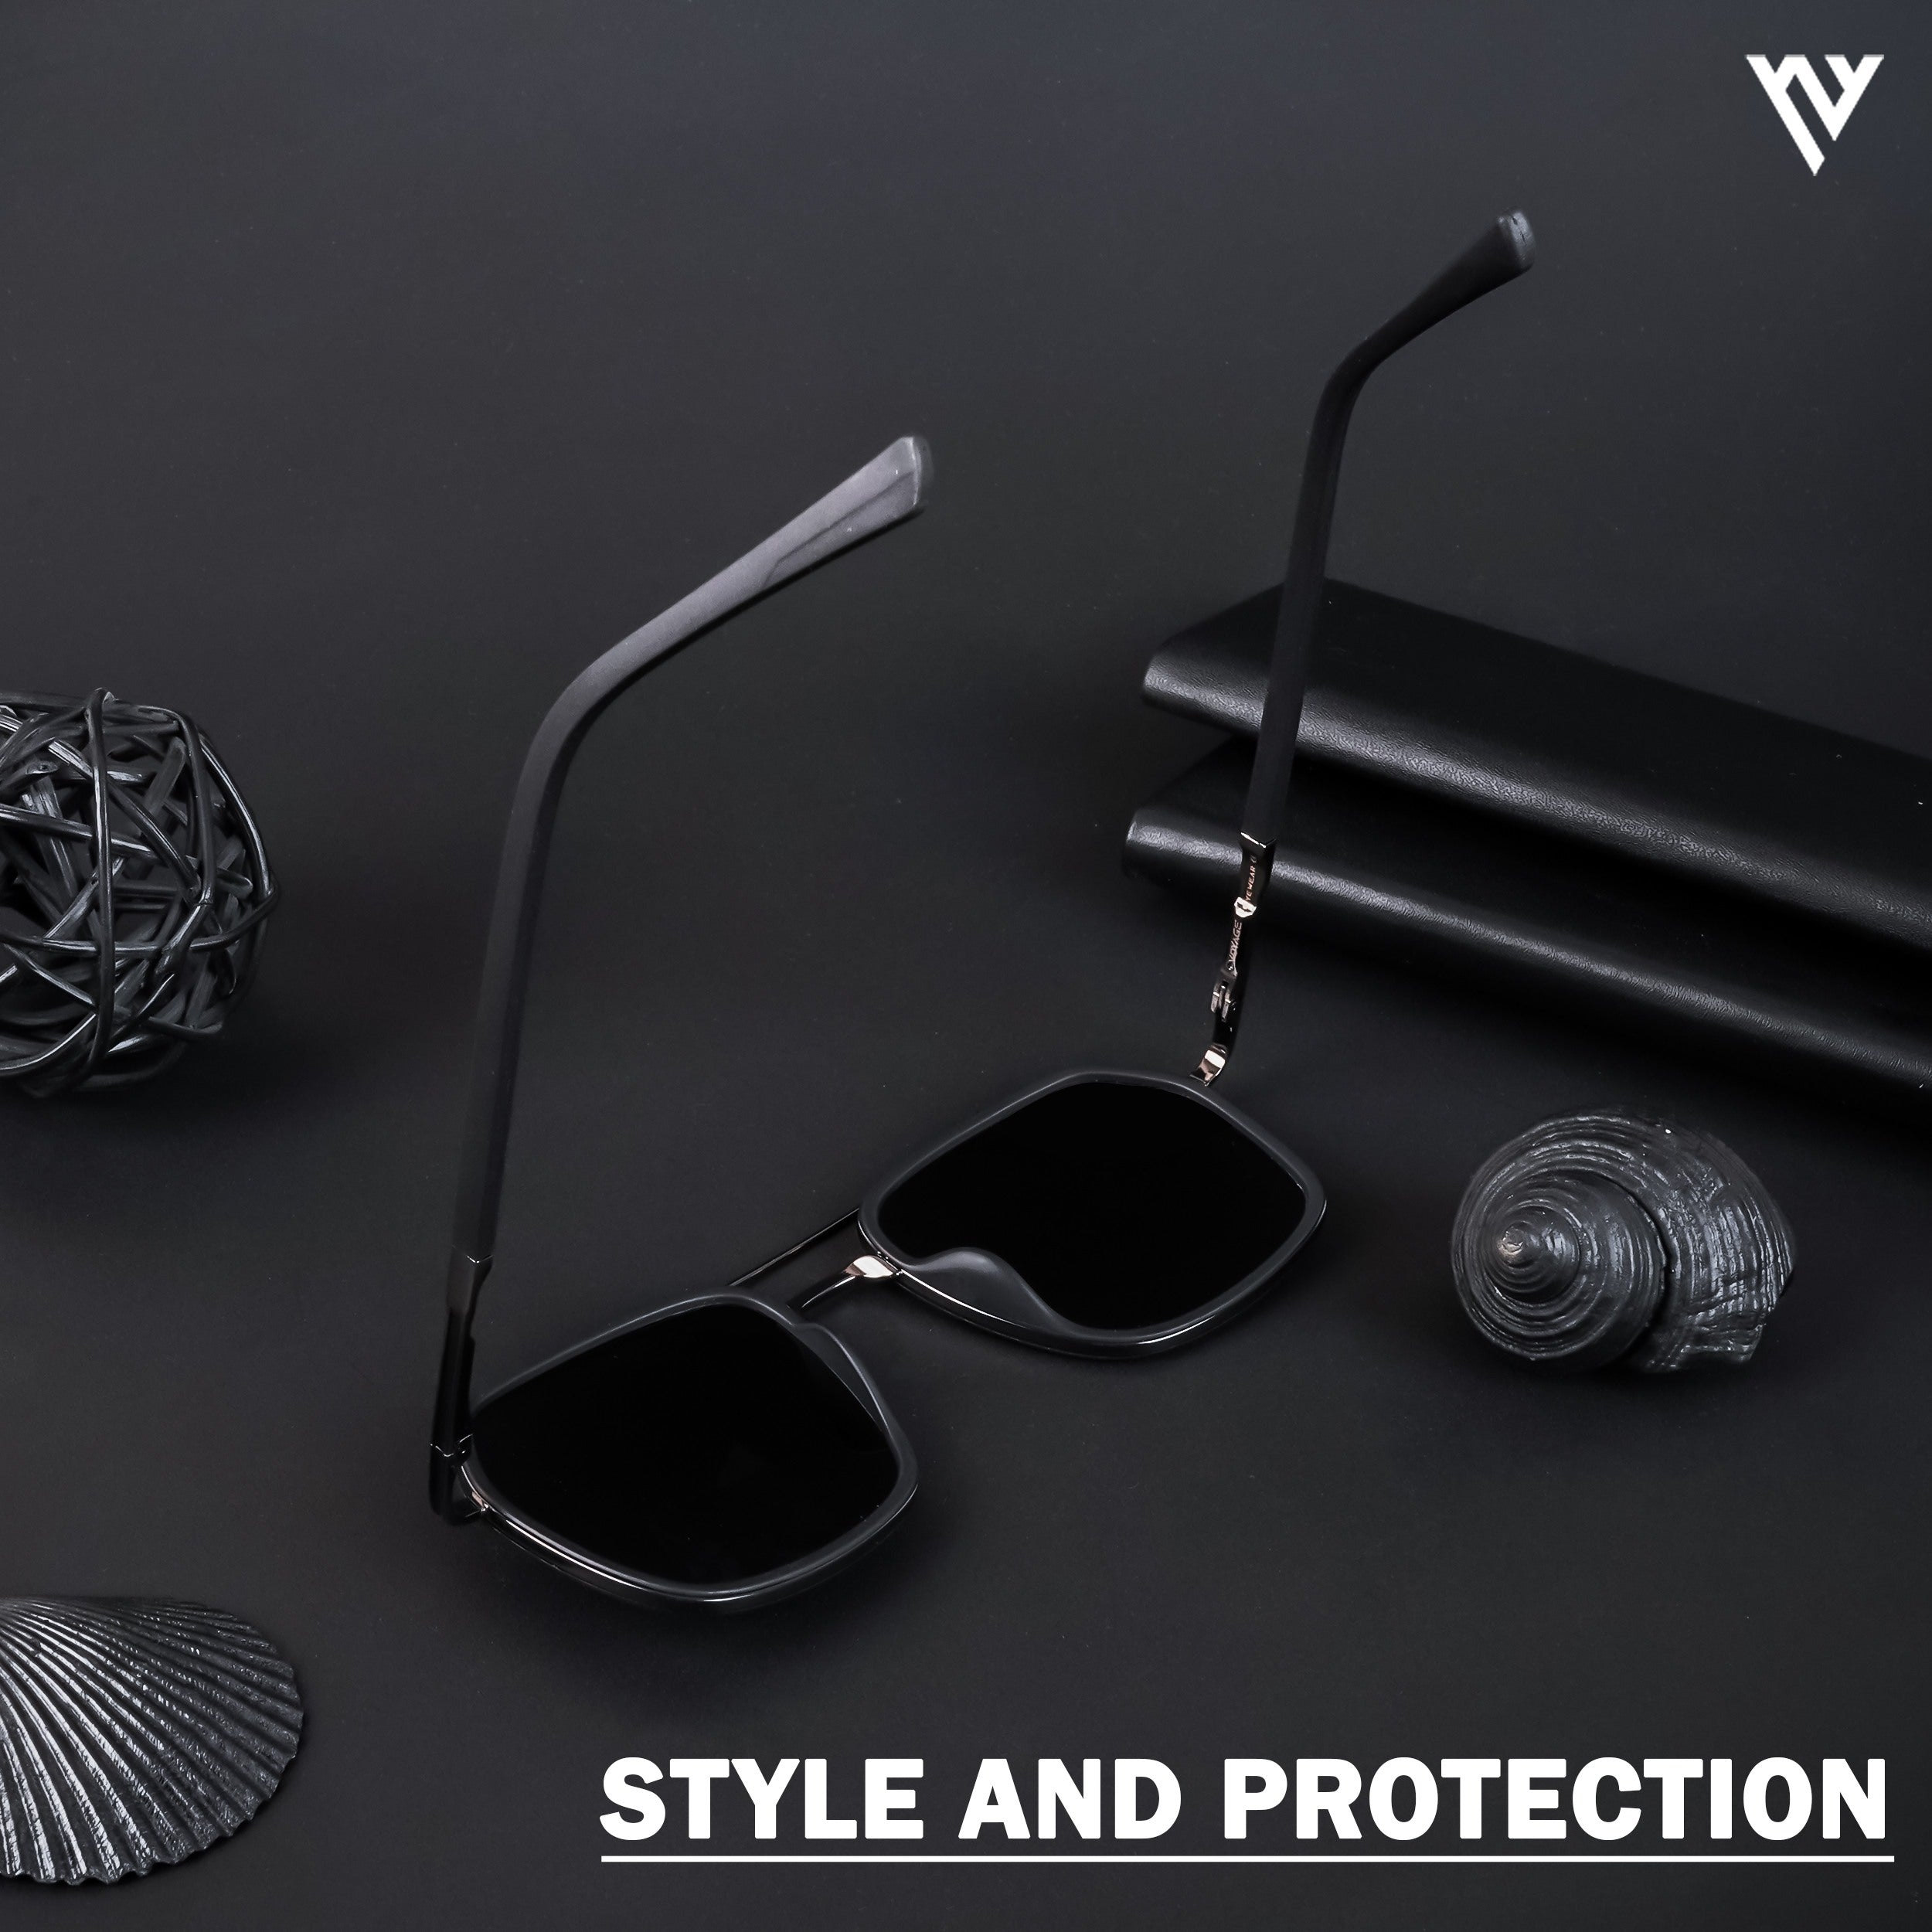 Voyage Exclusive Grey & Black Polarized Wayfarer Sunglasses for Men & Women - PMG4481